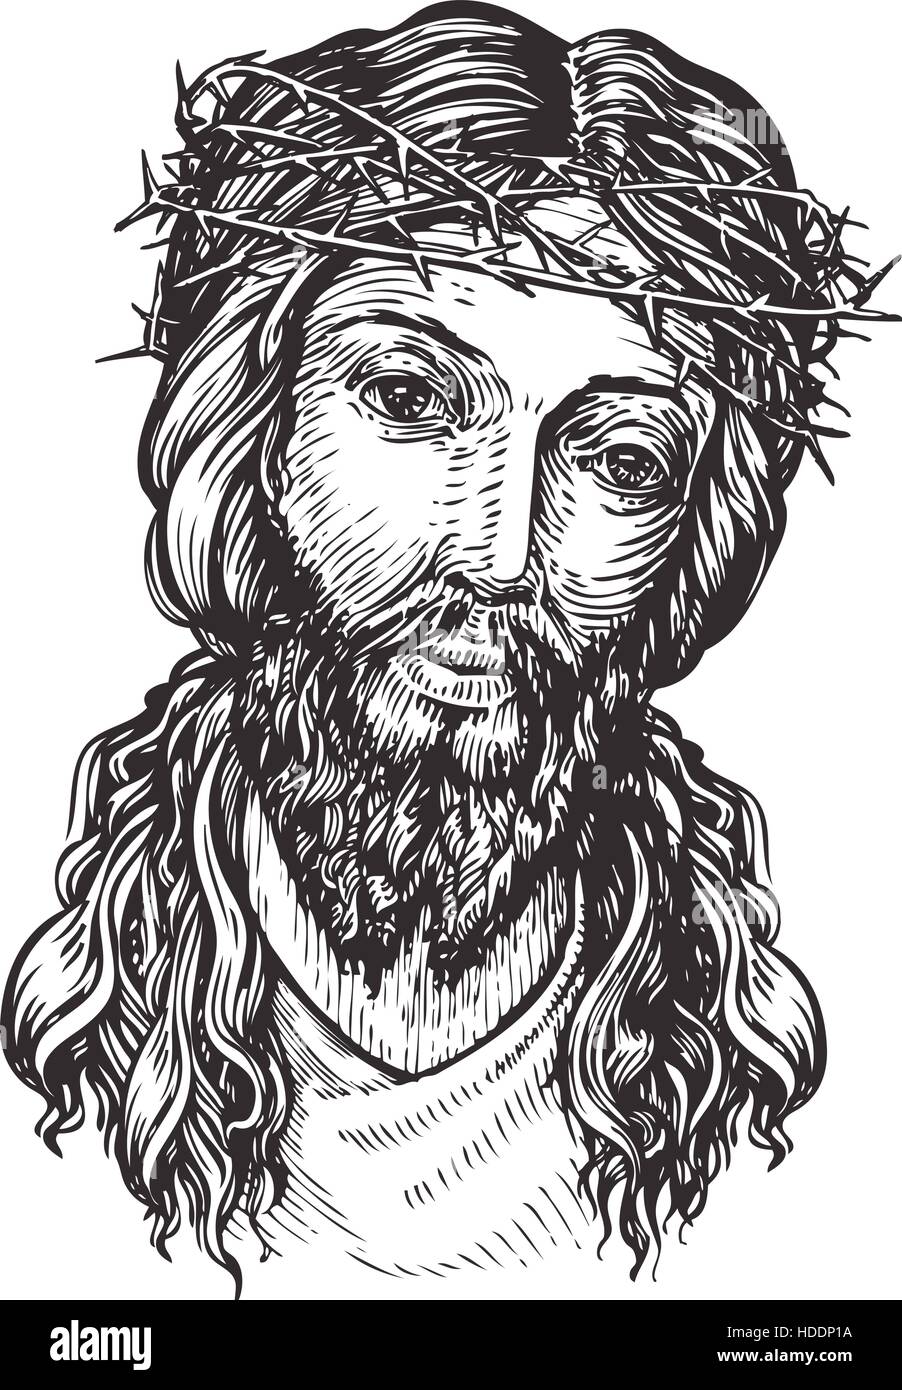 Jesus Christus mit dornigen Kranz auf dem Kopf. Skizze-Vektor-illustration Stock Vektor